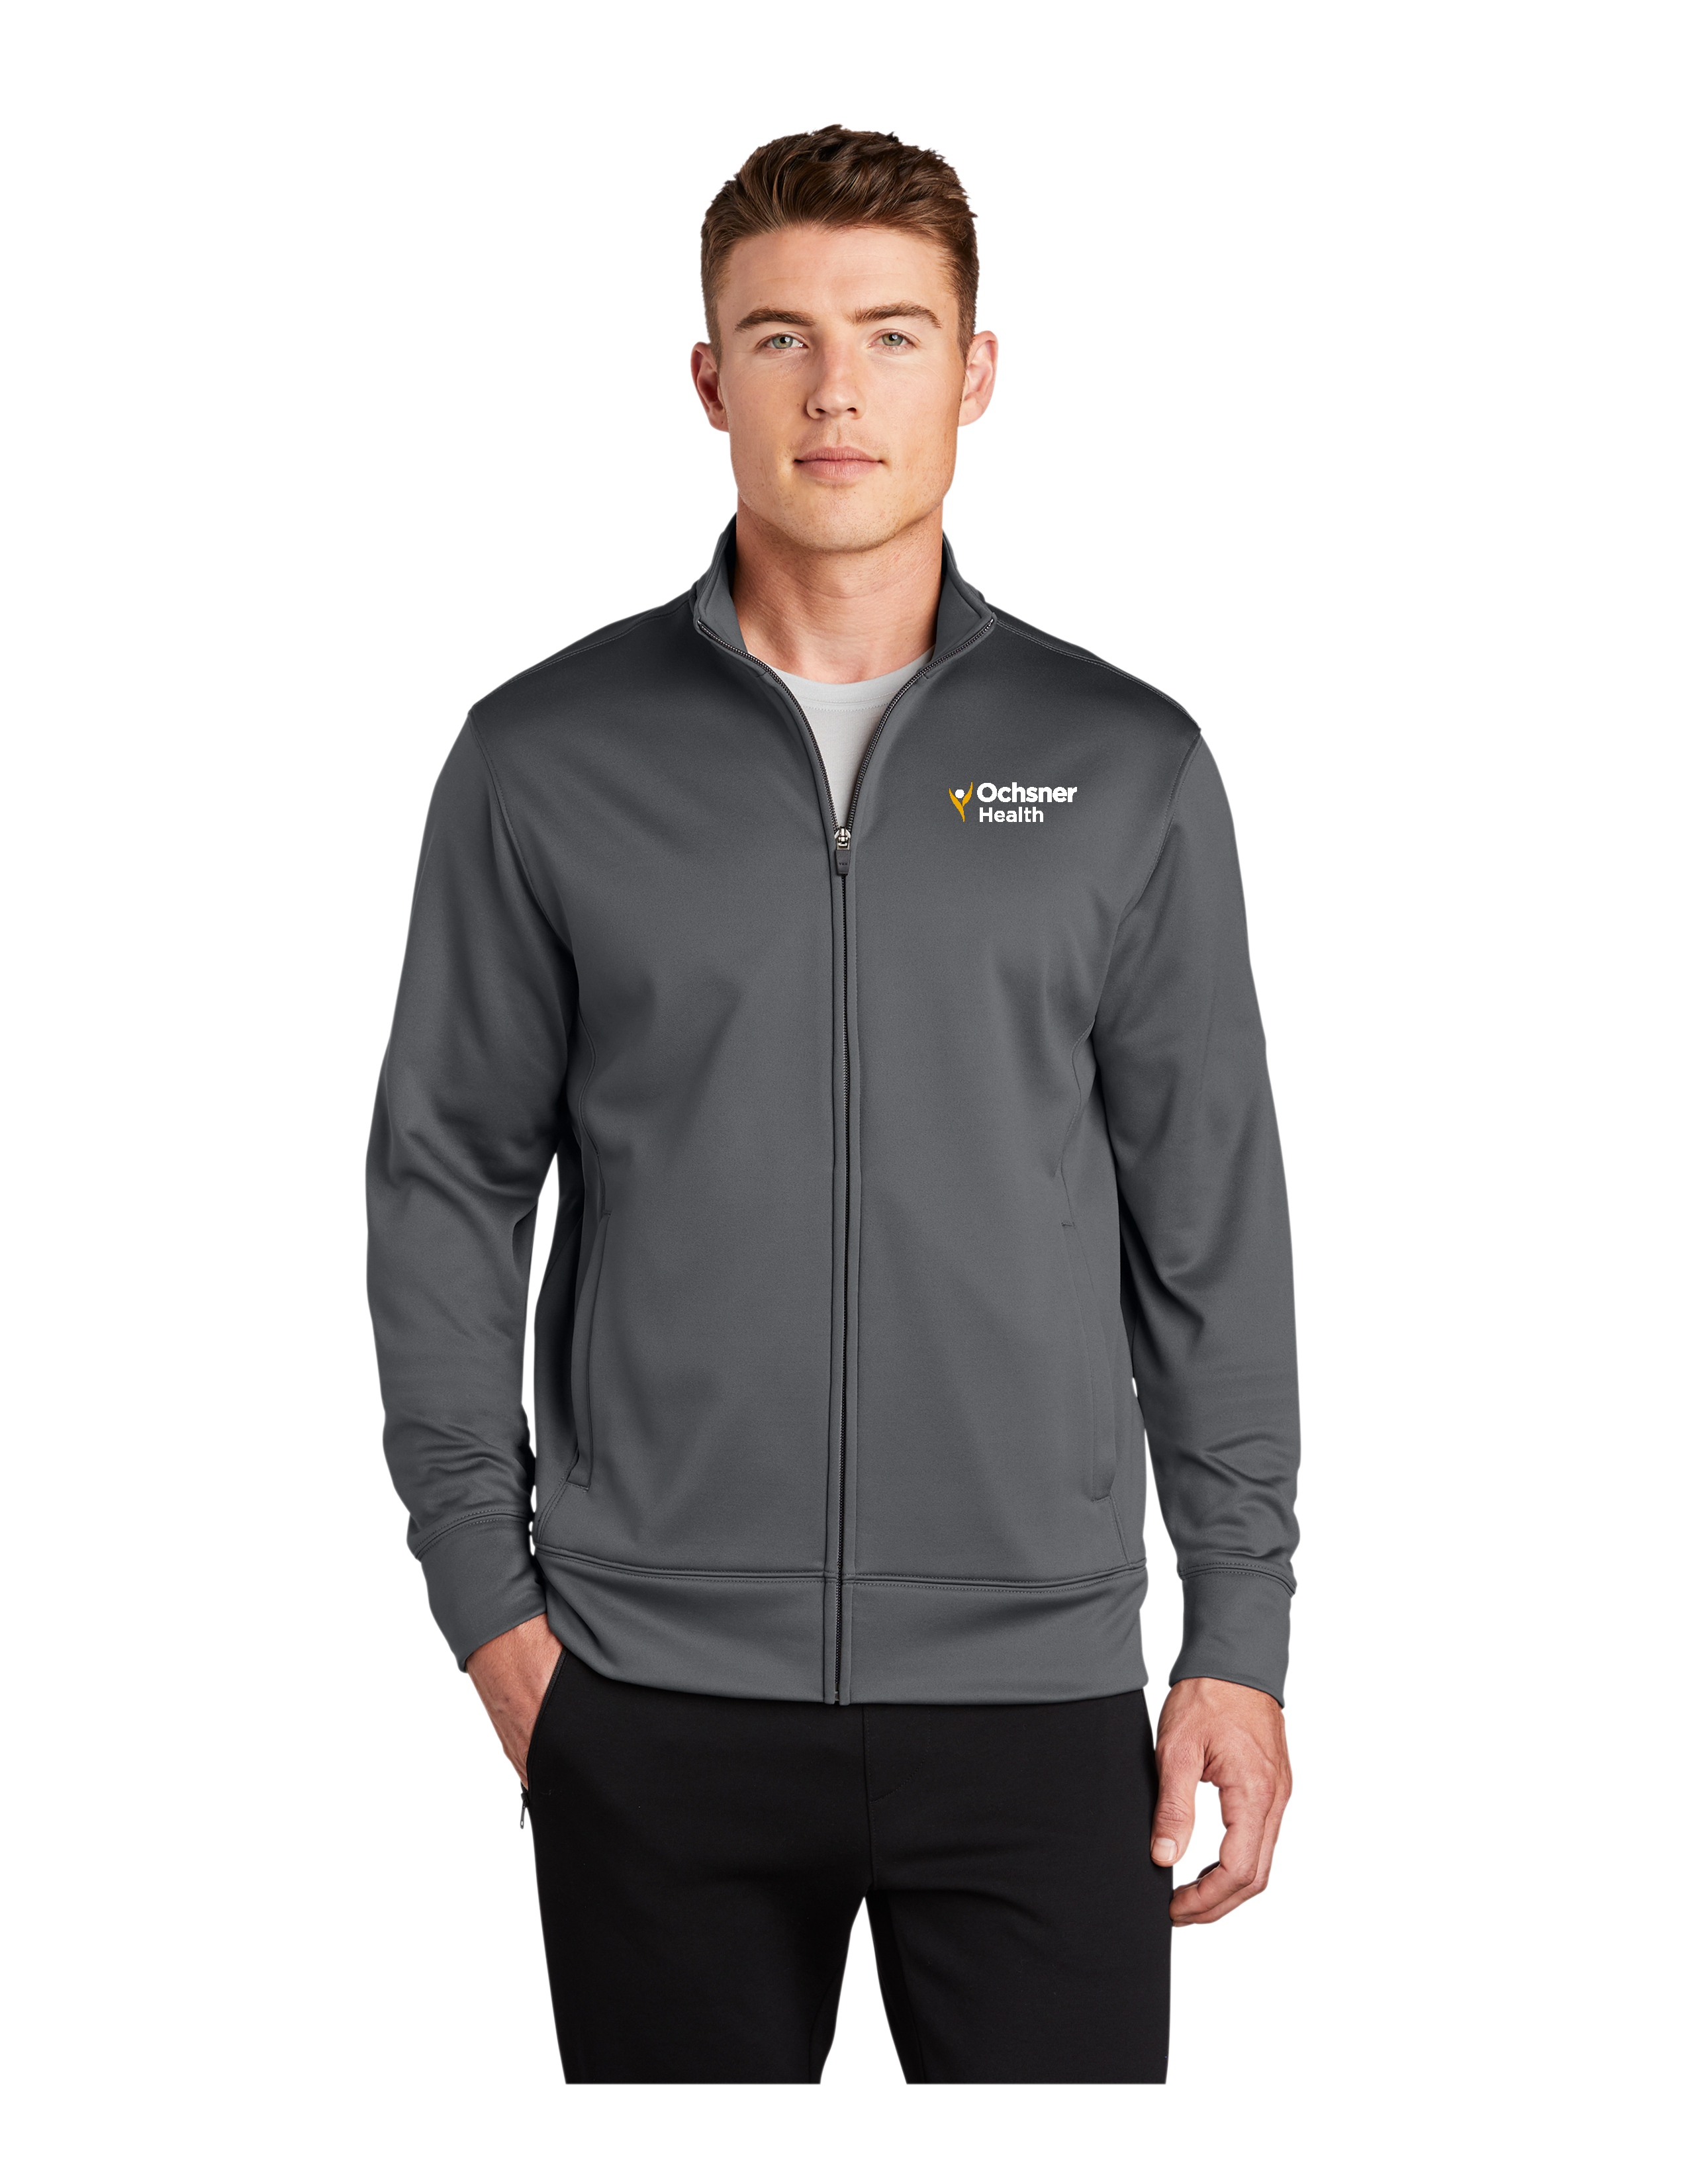 Men's Sportwick Fleece Jacket, , large image number 2